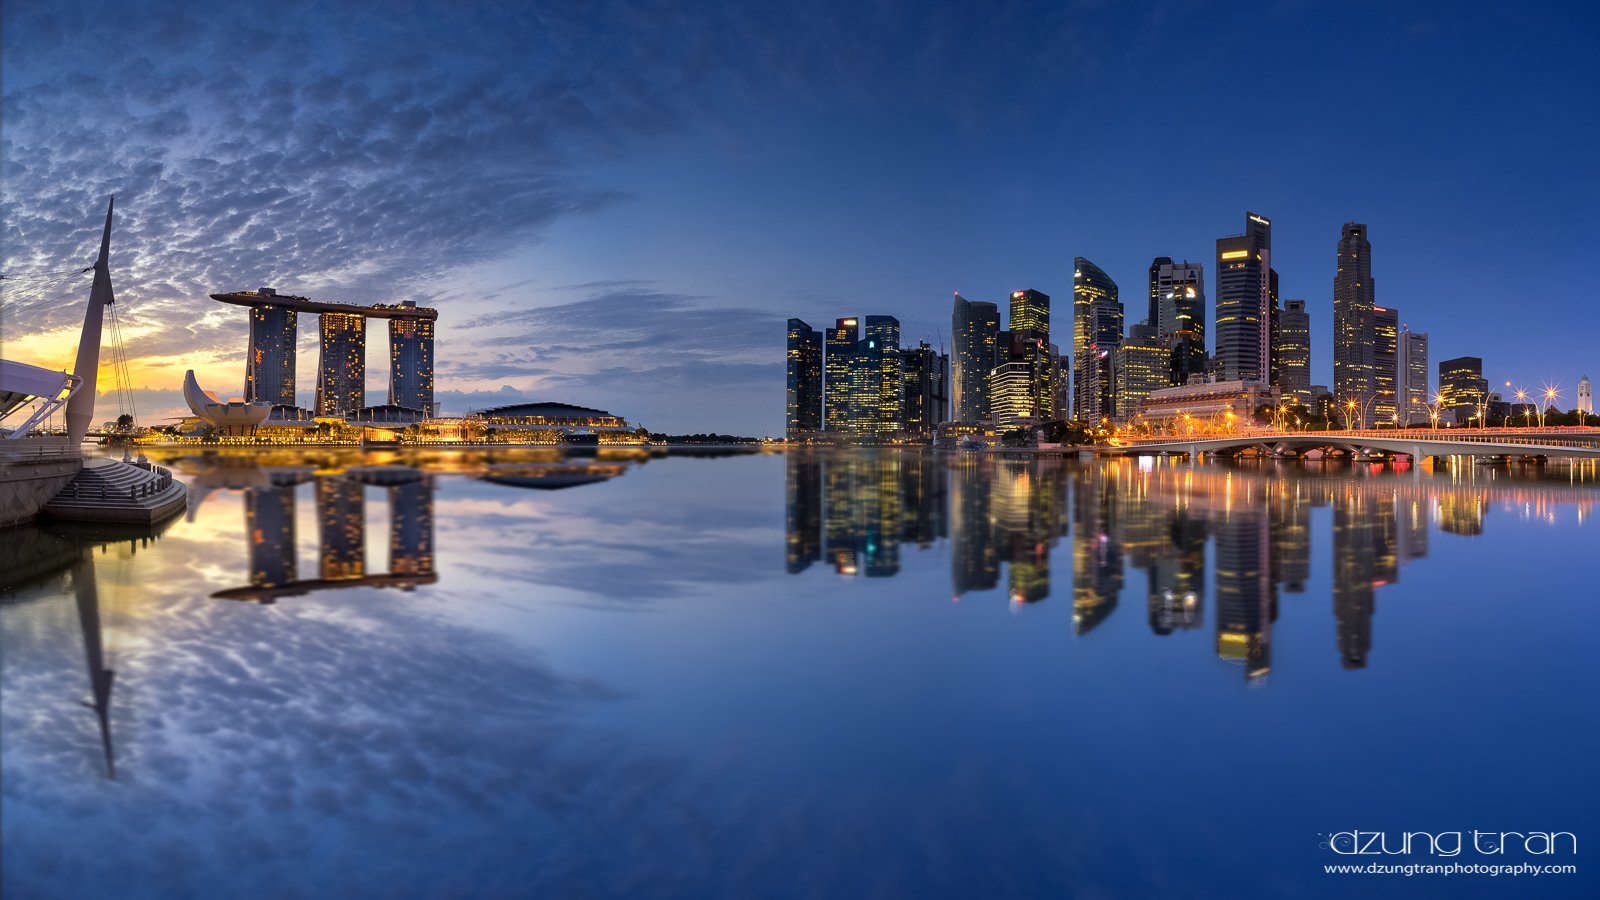 #cityscape #panorama #spaceship #singapore #marinabaysands #reflection, Tran Minh Dung